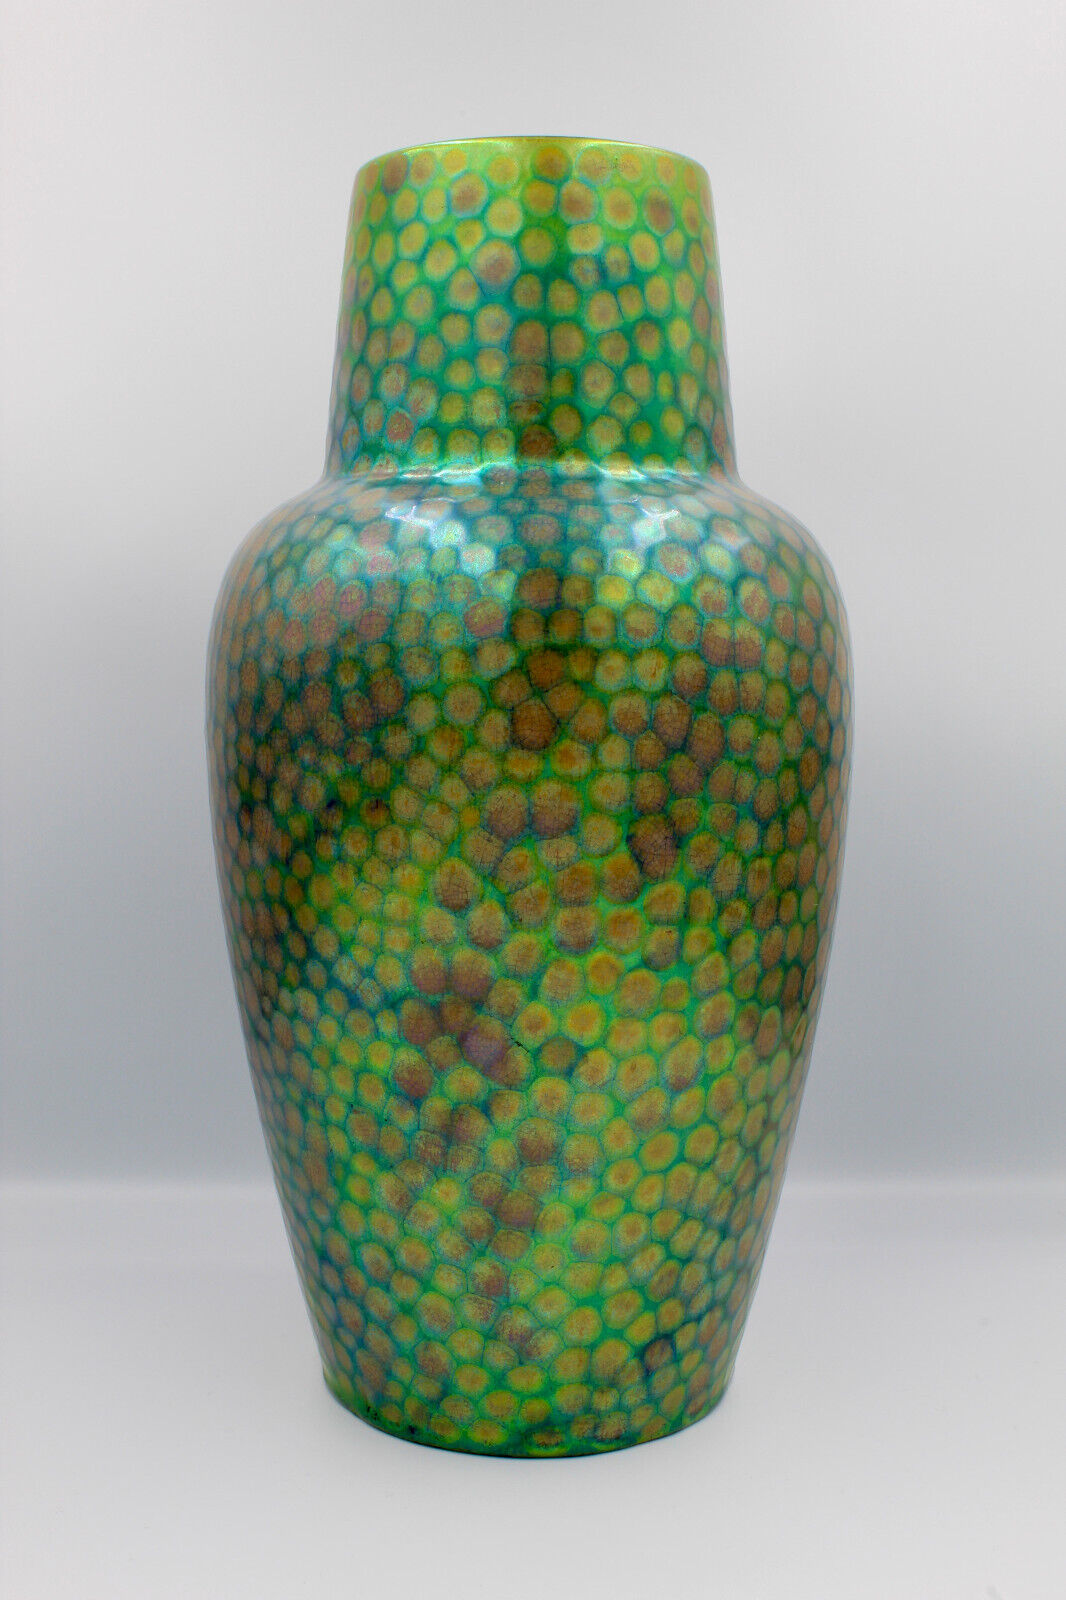 Zsolnay art nouveau vase with peacock eosin glaze (1900’s)